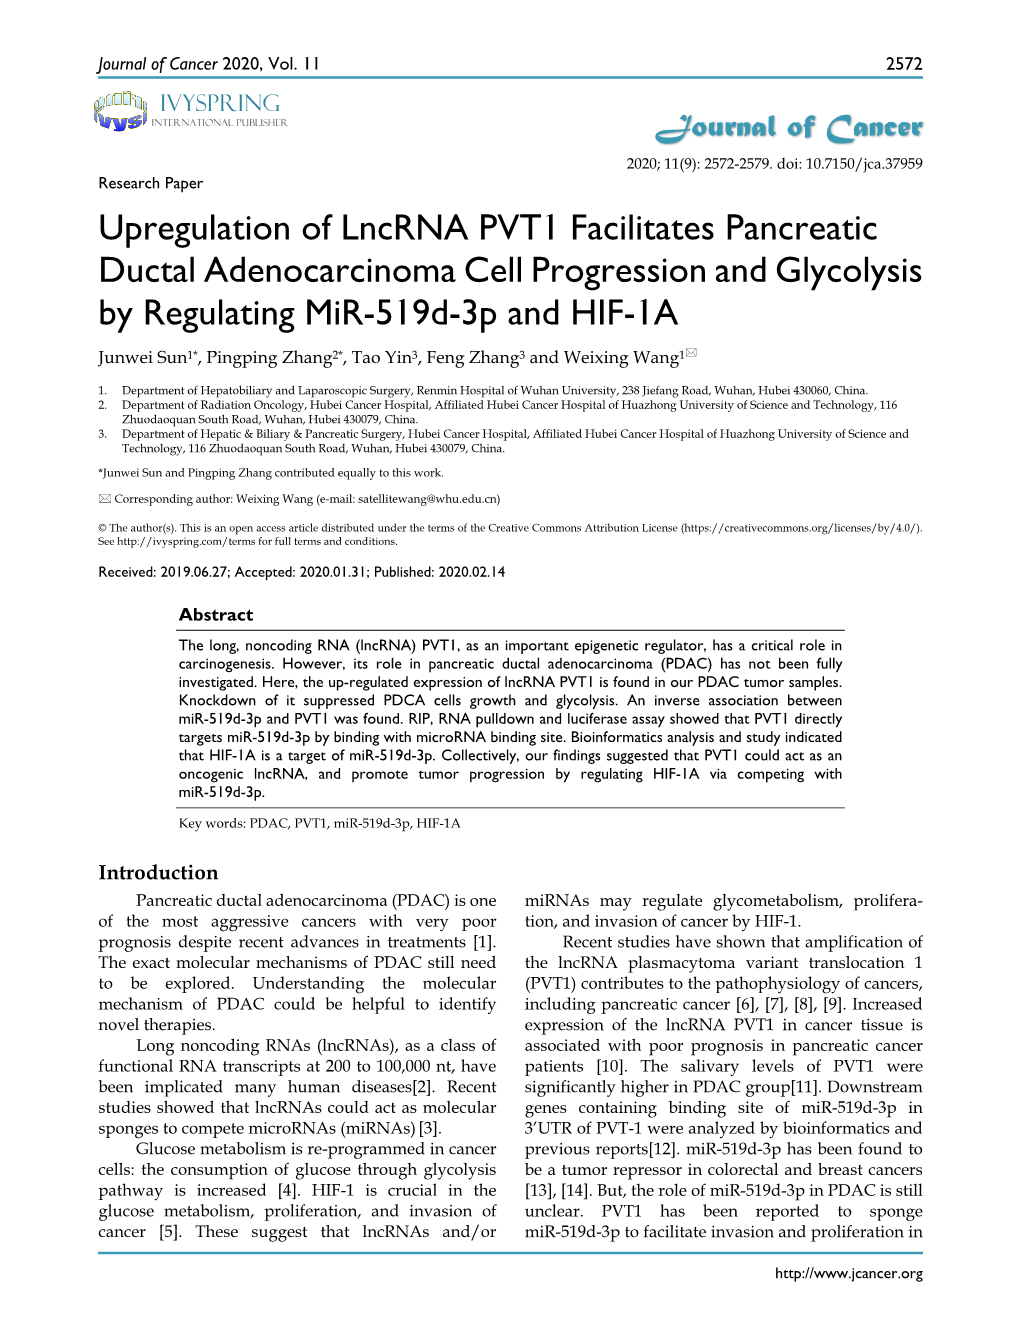 Upregulation of Lncrna PVT1 Facilitates